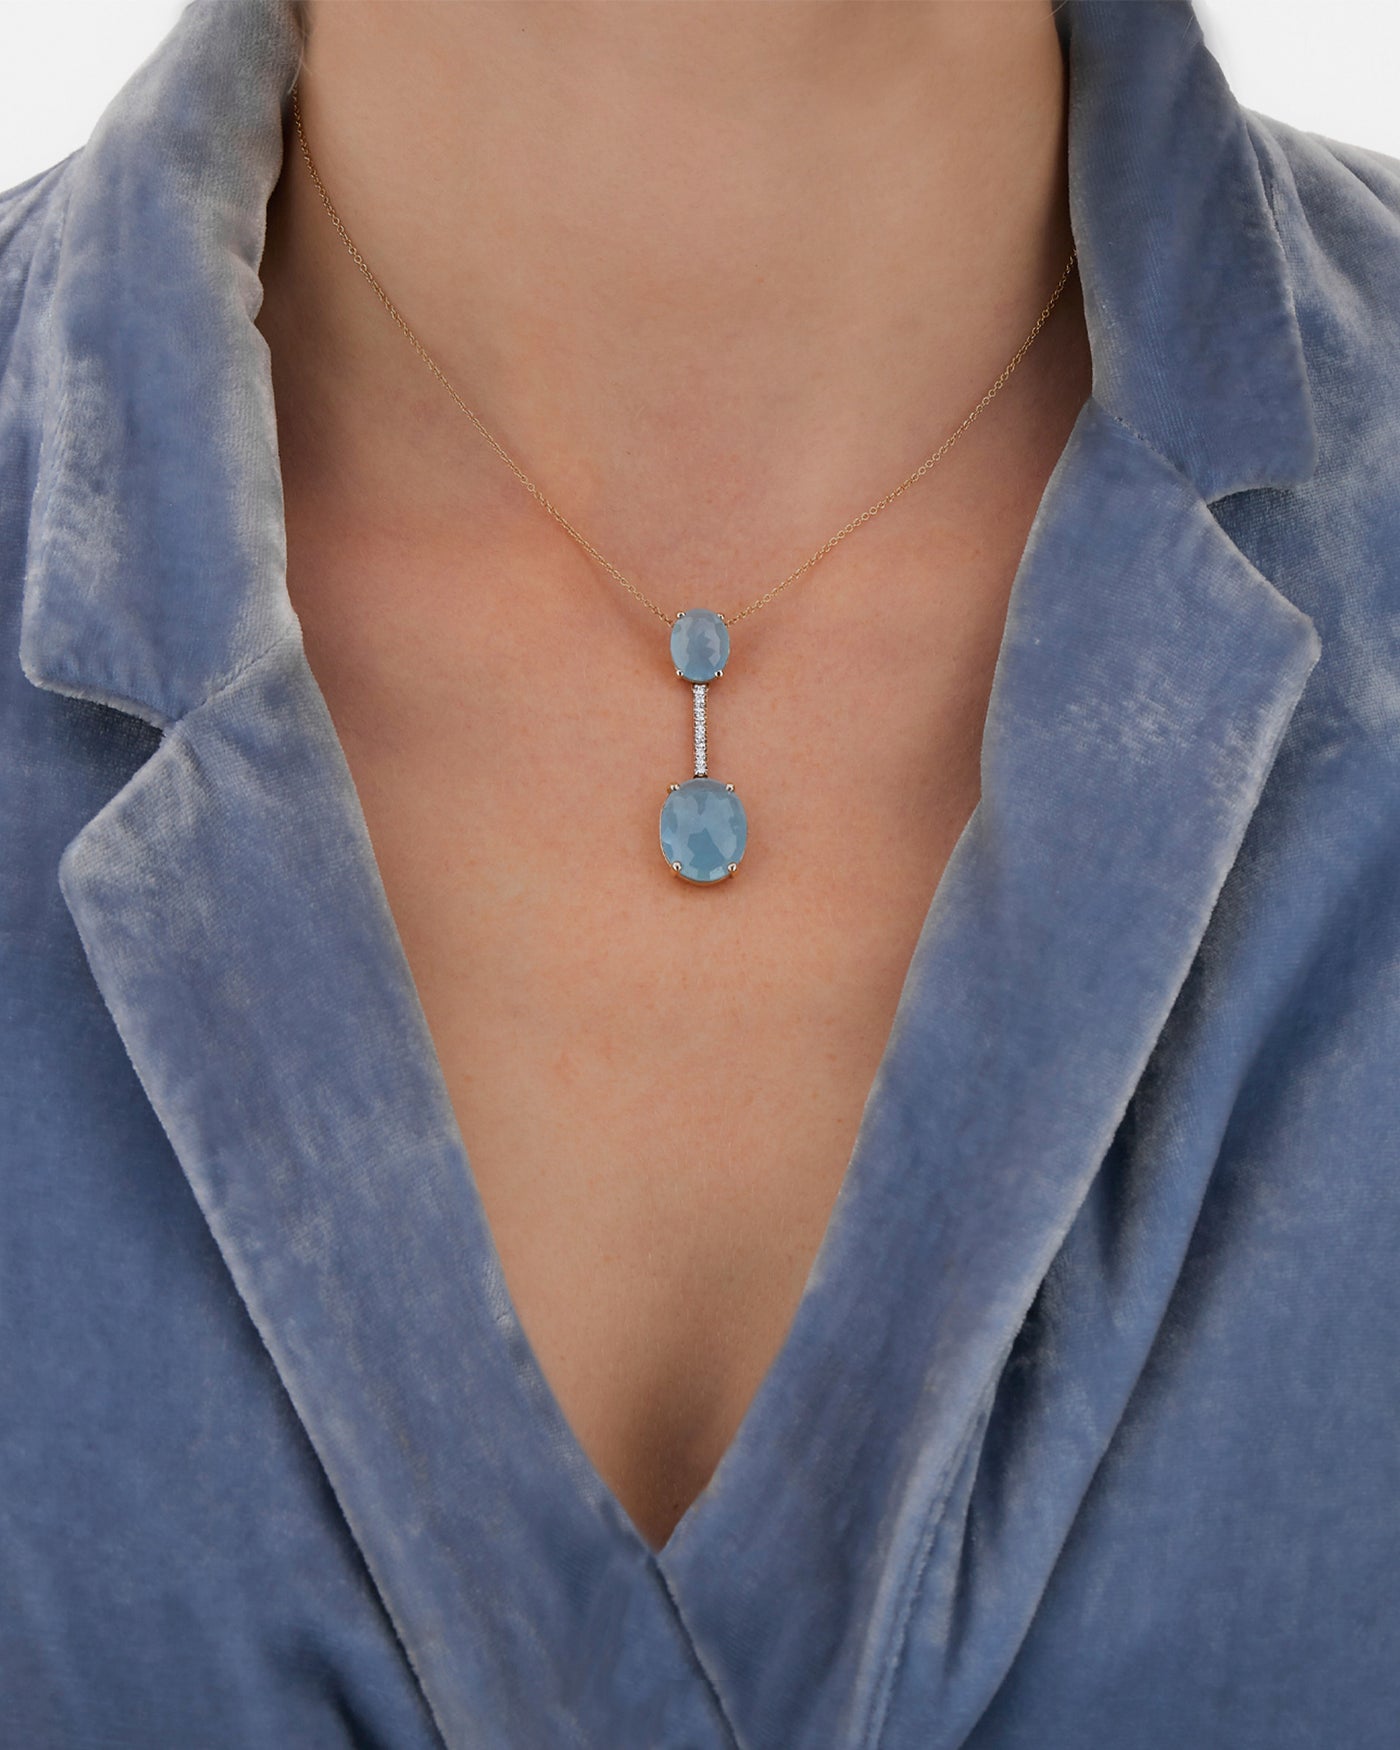 "ipanema" aquamarine, diamonds and 18kt gold bar necklace 